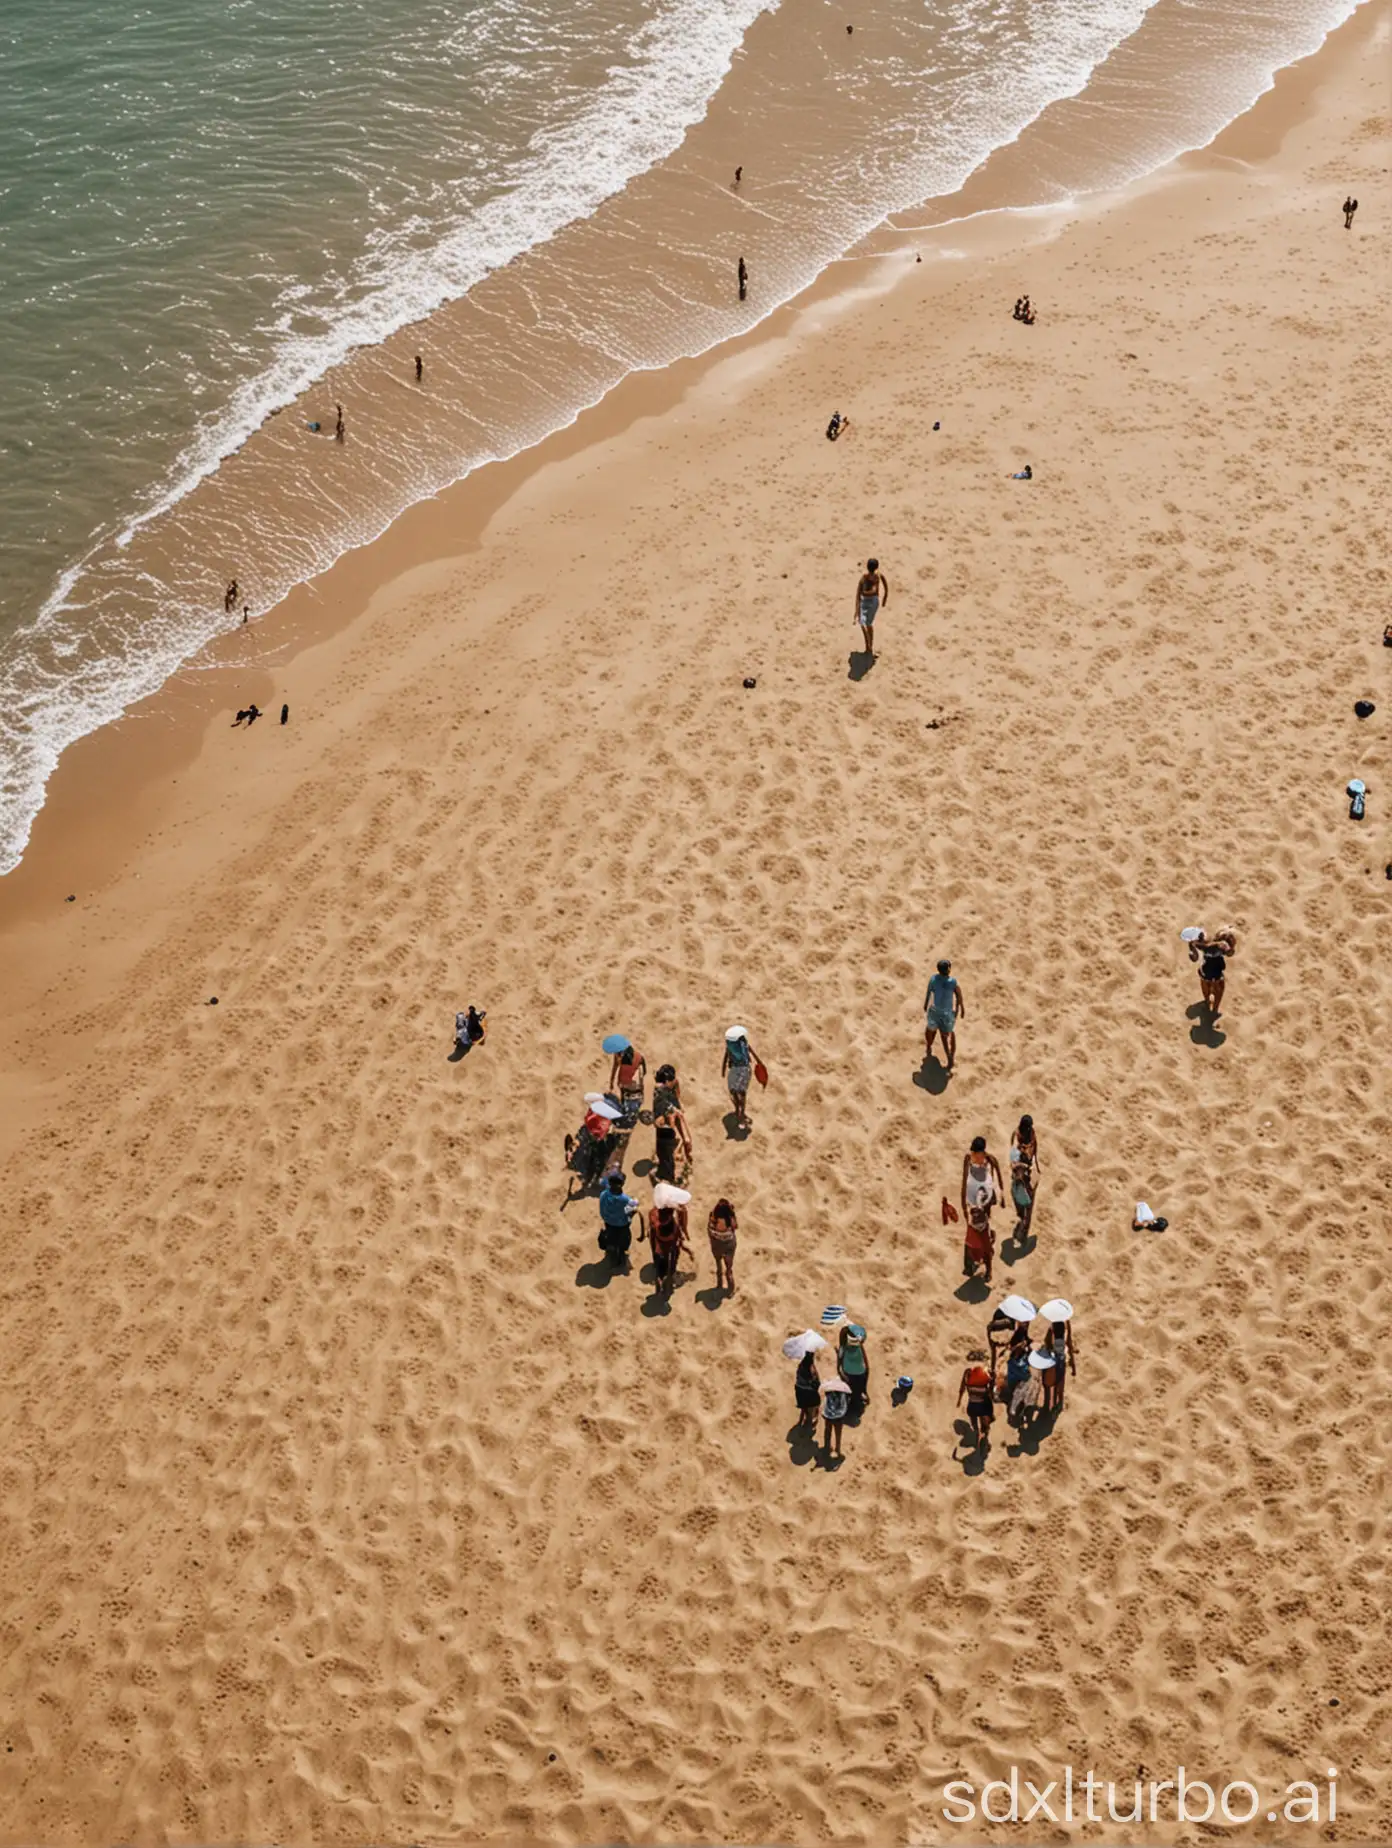 Beachgoers-Enjoying-a-Sunny-Day